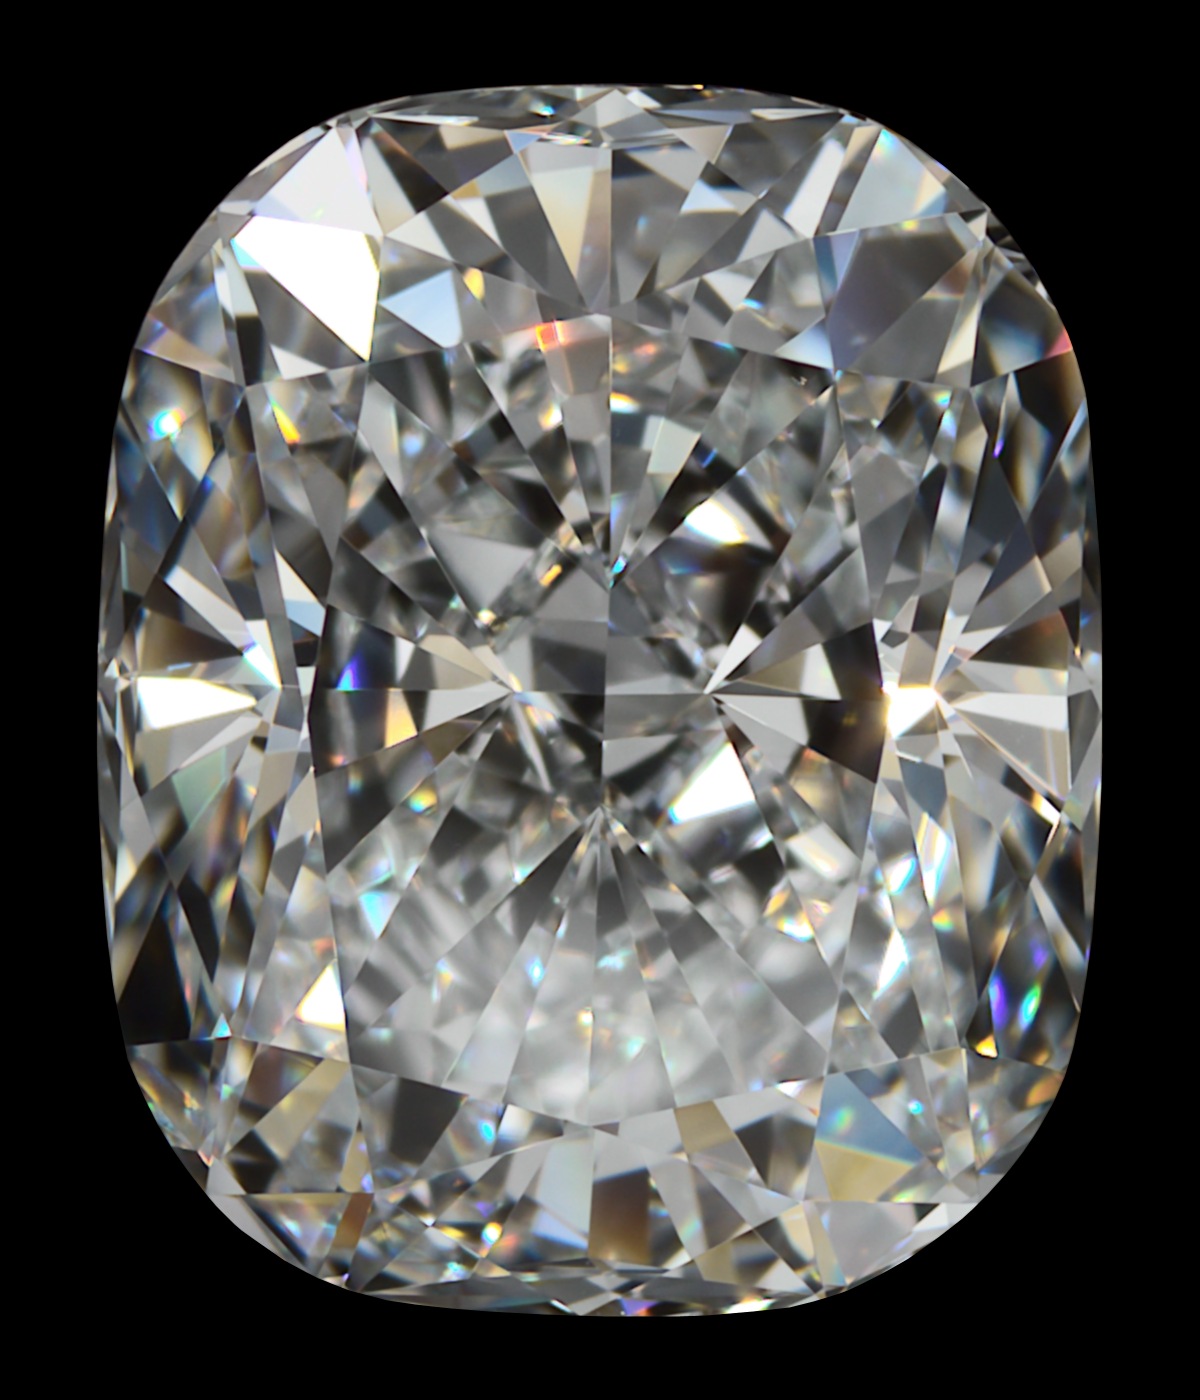 Lab Grown Diamonds Have a Bright Future